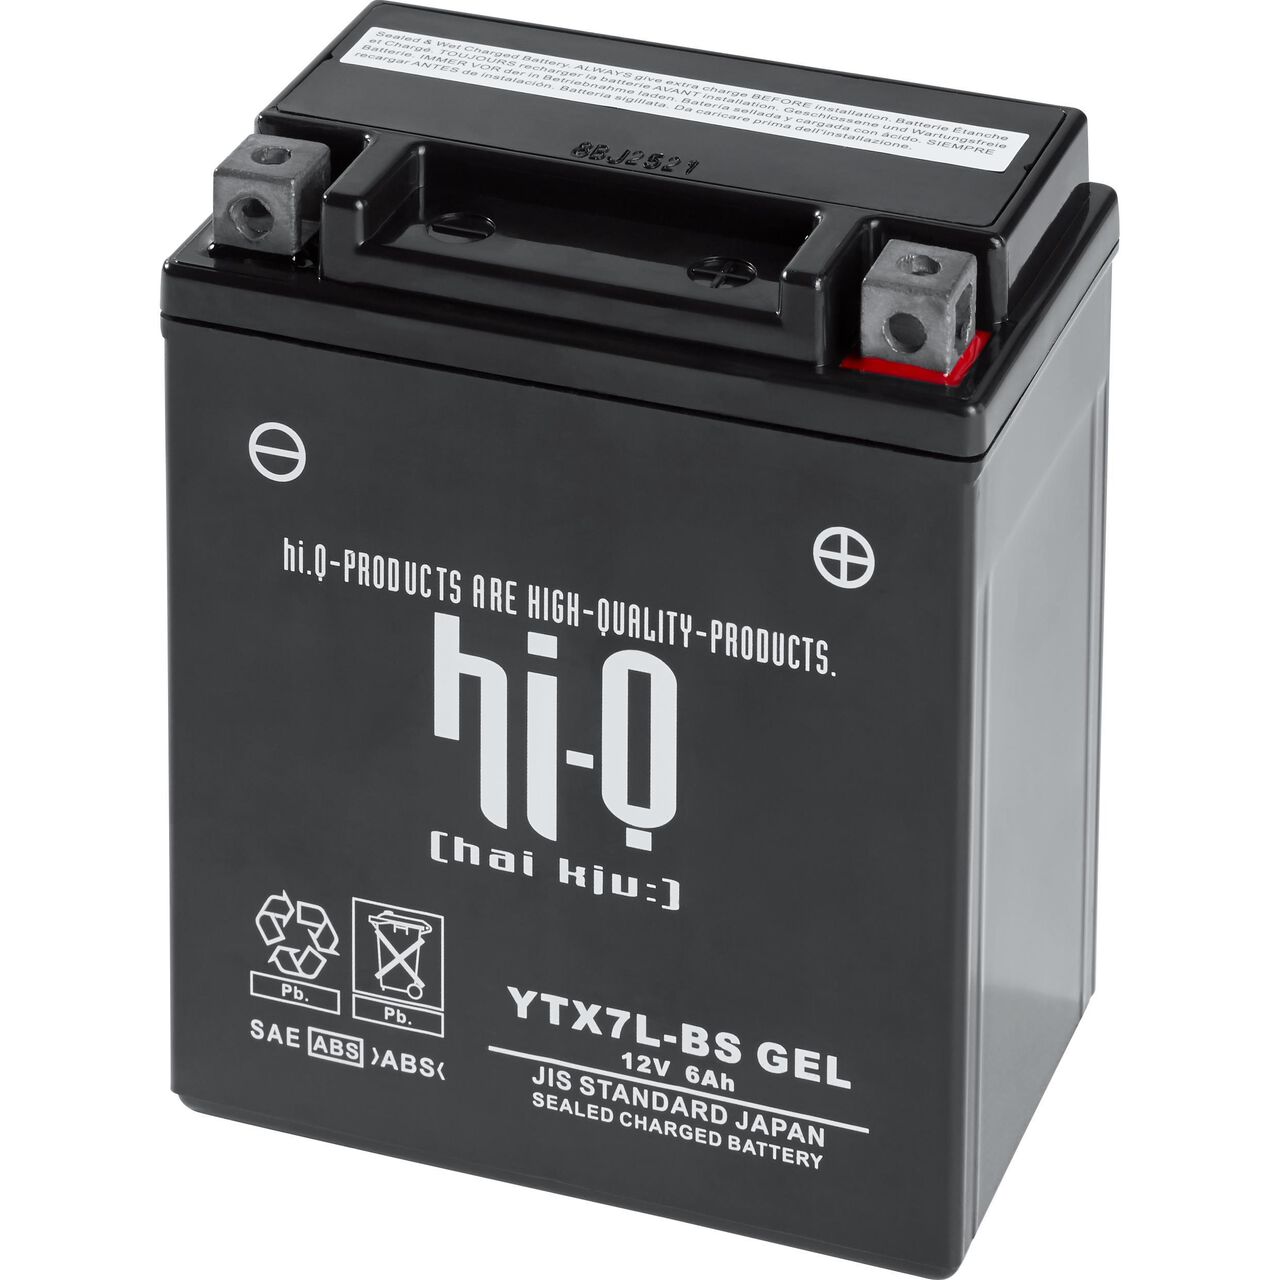 Q-Batteries QT12B-4 AGM Motorradbatterie 12V 10Ah 170A